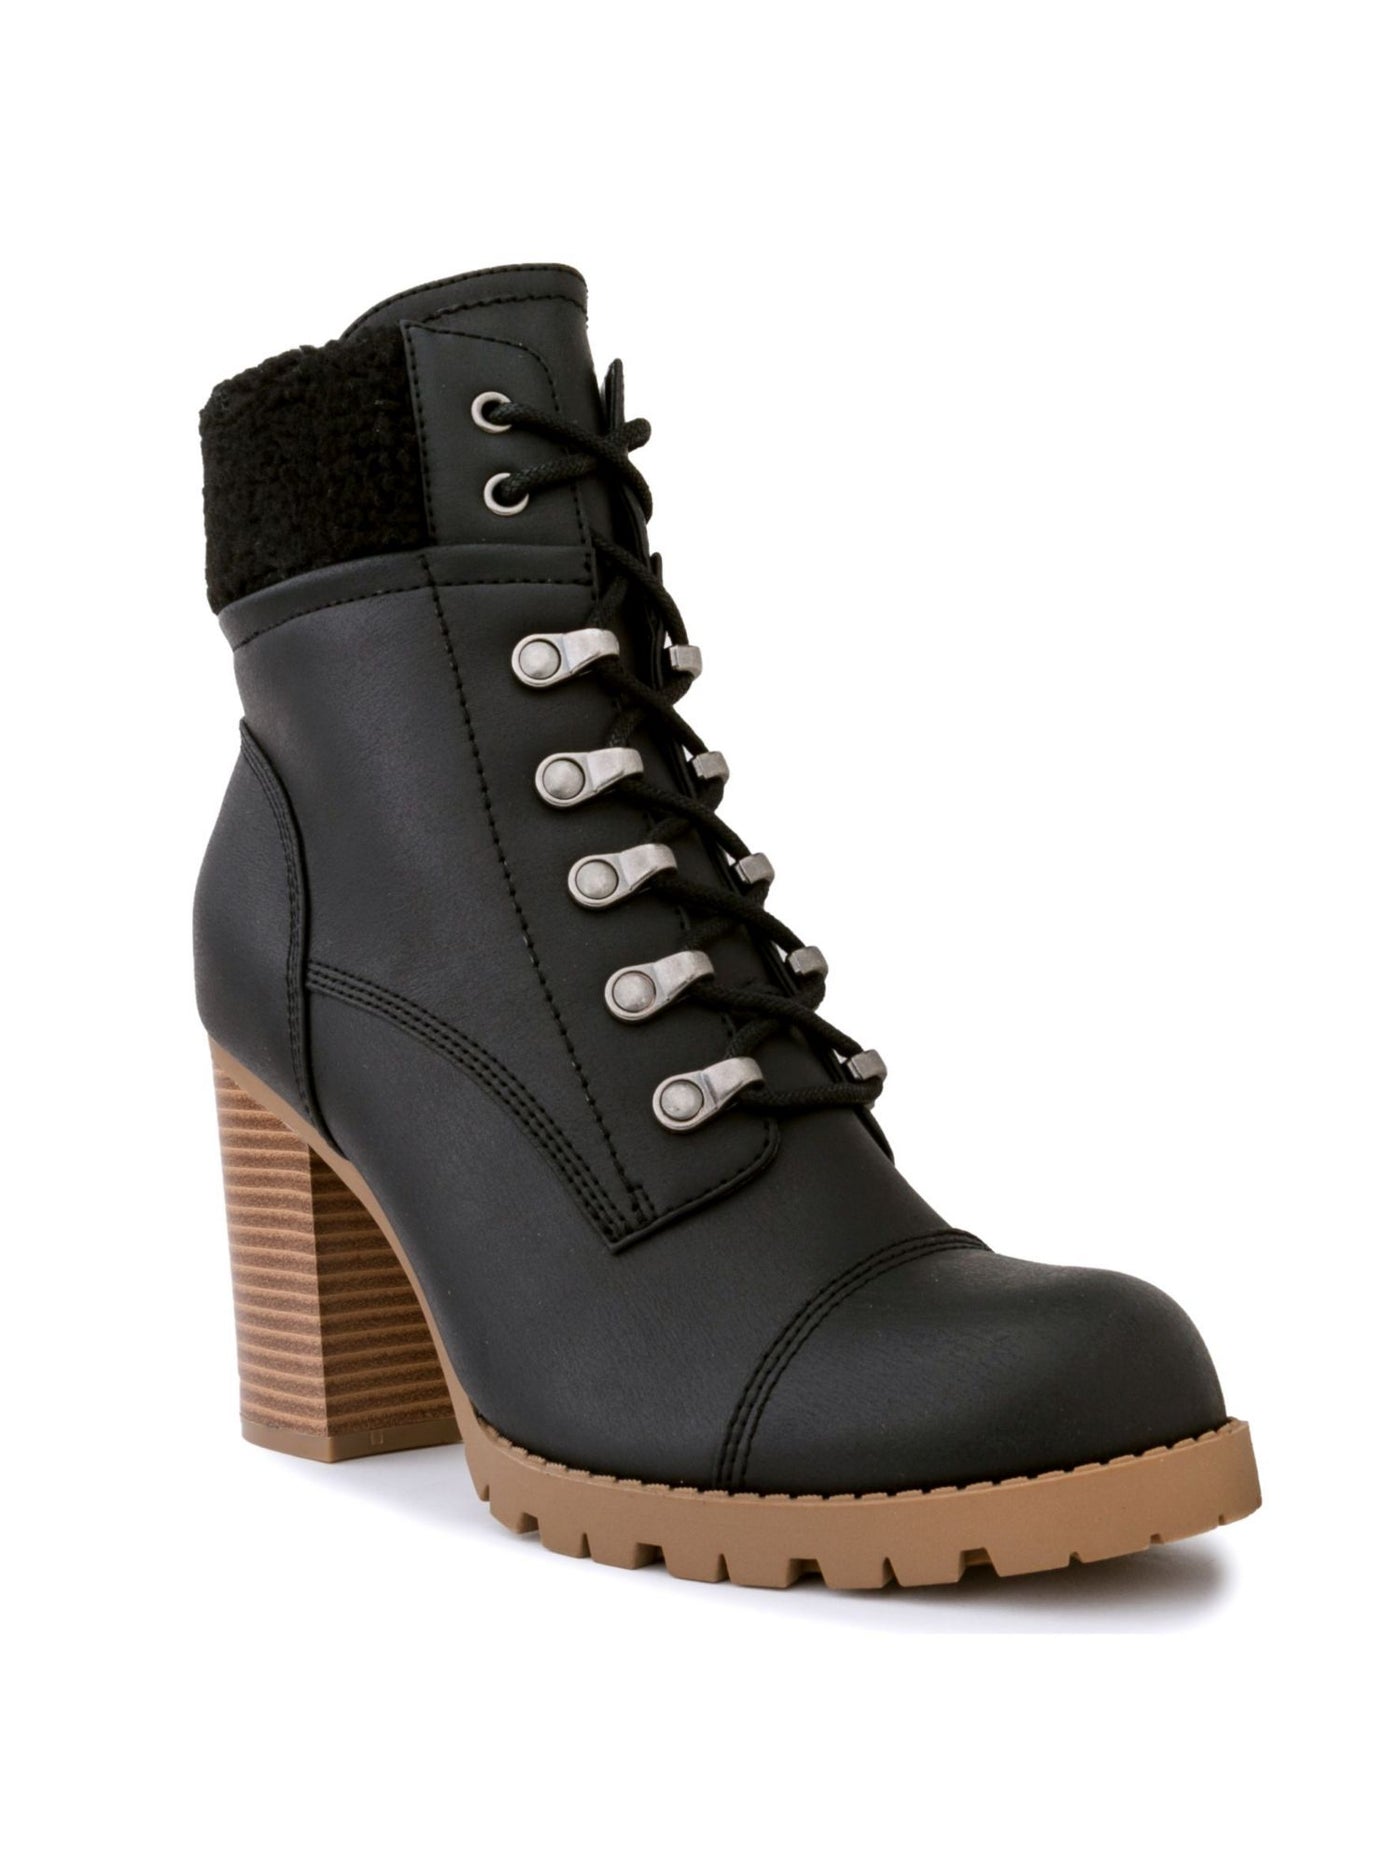 SUGAR Womens Black Side Zip Round Toe Block Heel Lace-Up Combat Boots 11